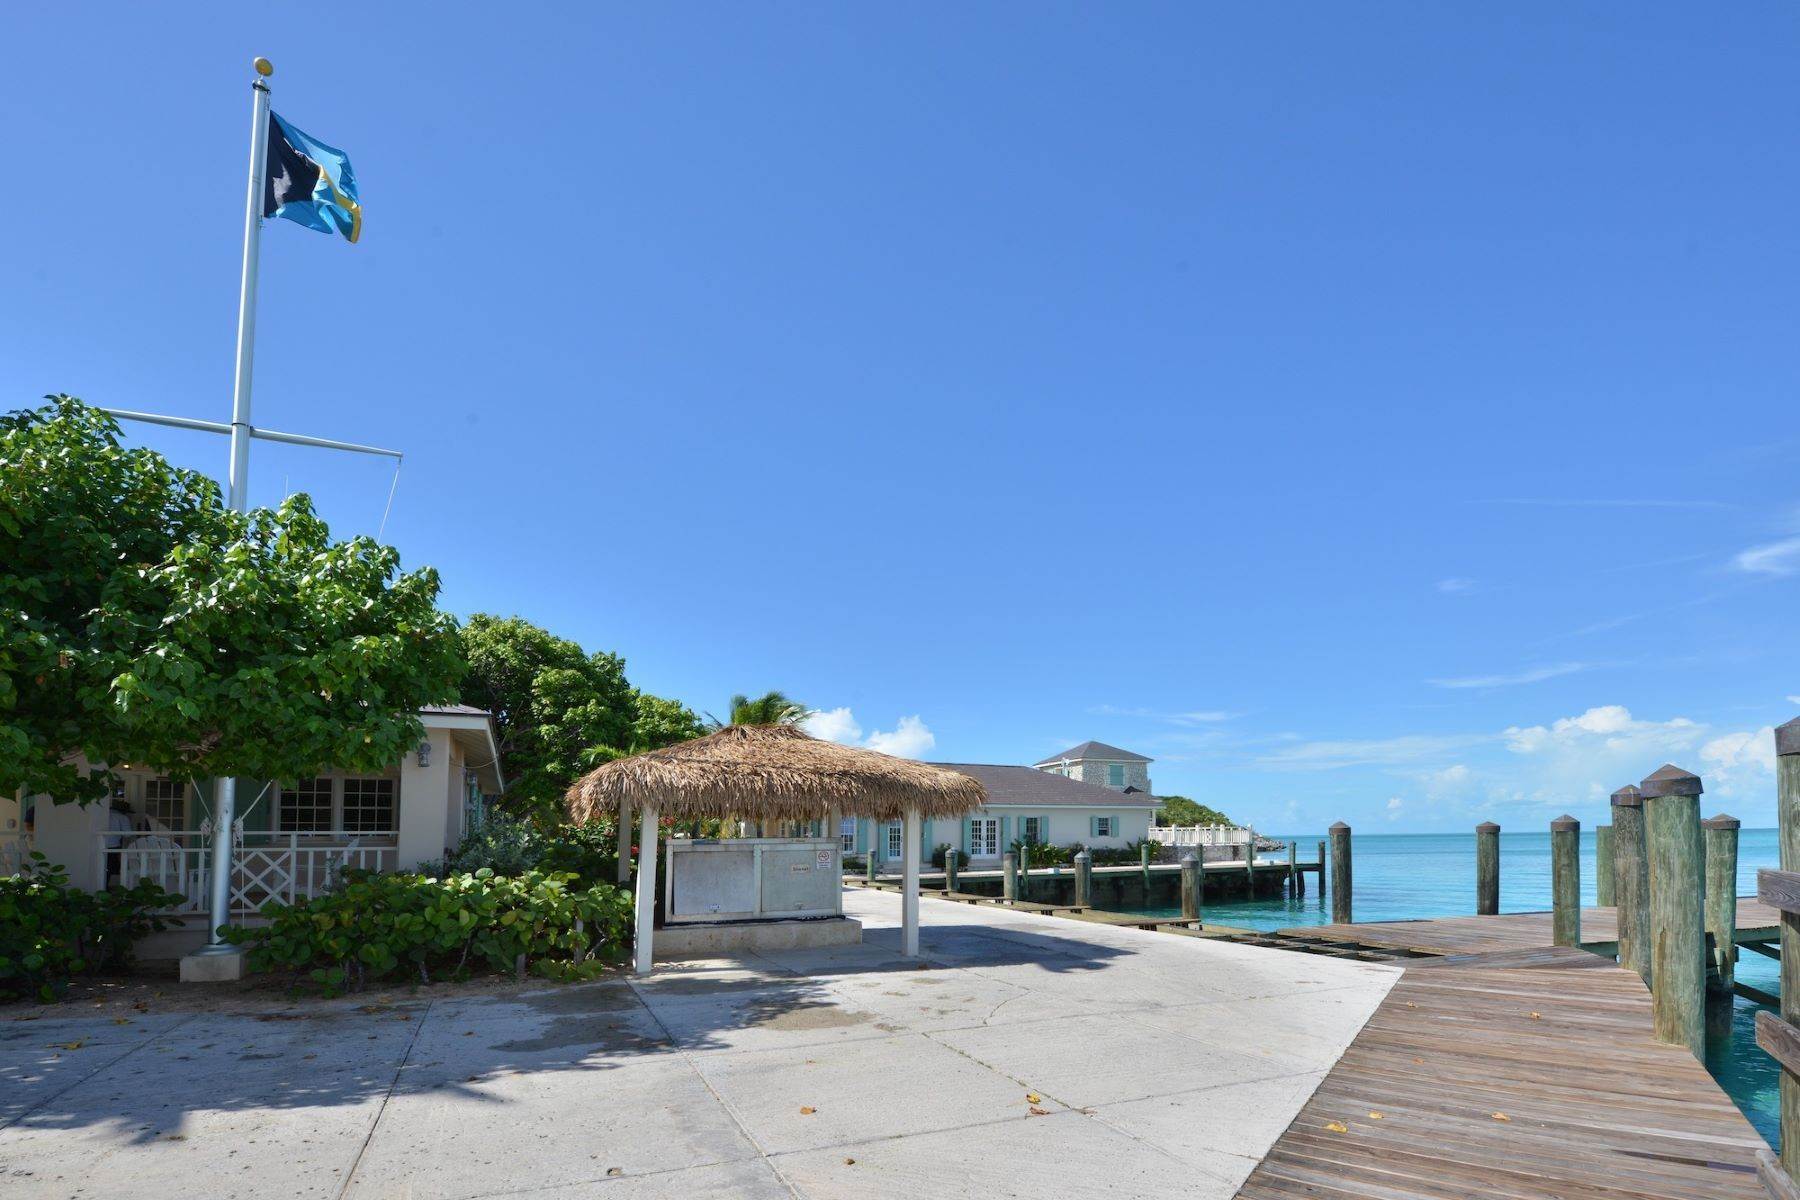 6. Private Islands for Sale at Exuma Cays, Exuma, Bahamas